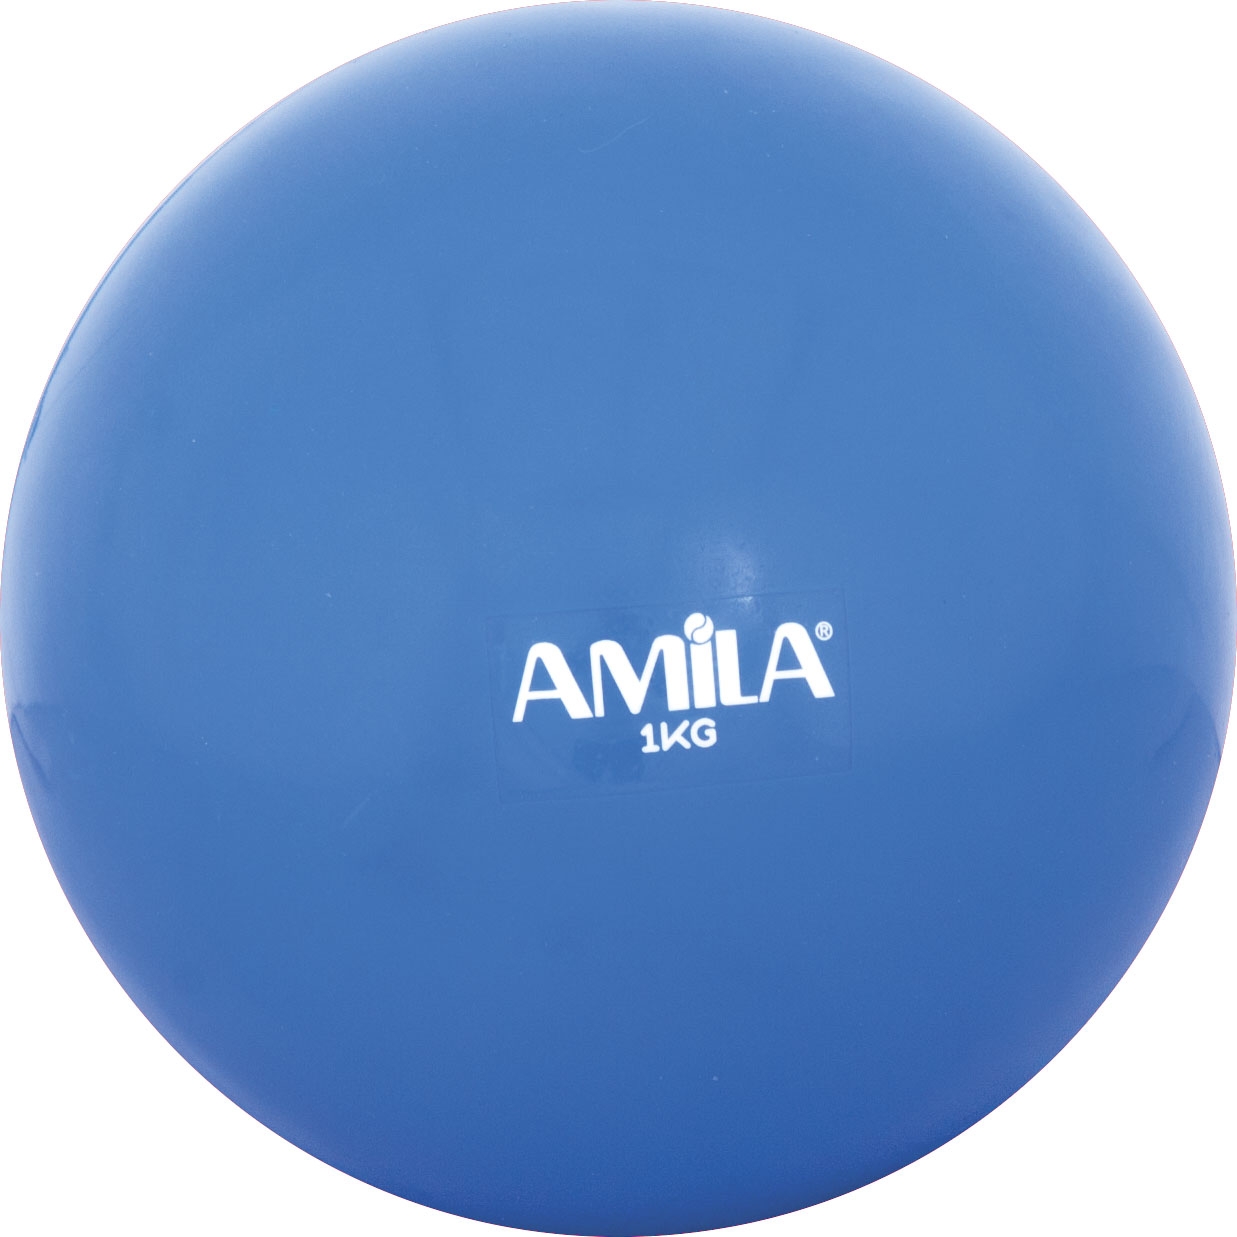 Amila Toning Ball 1kg Blue